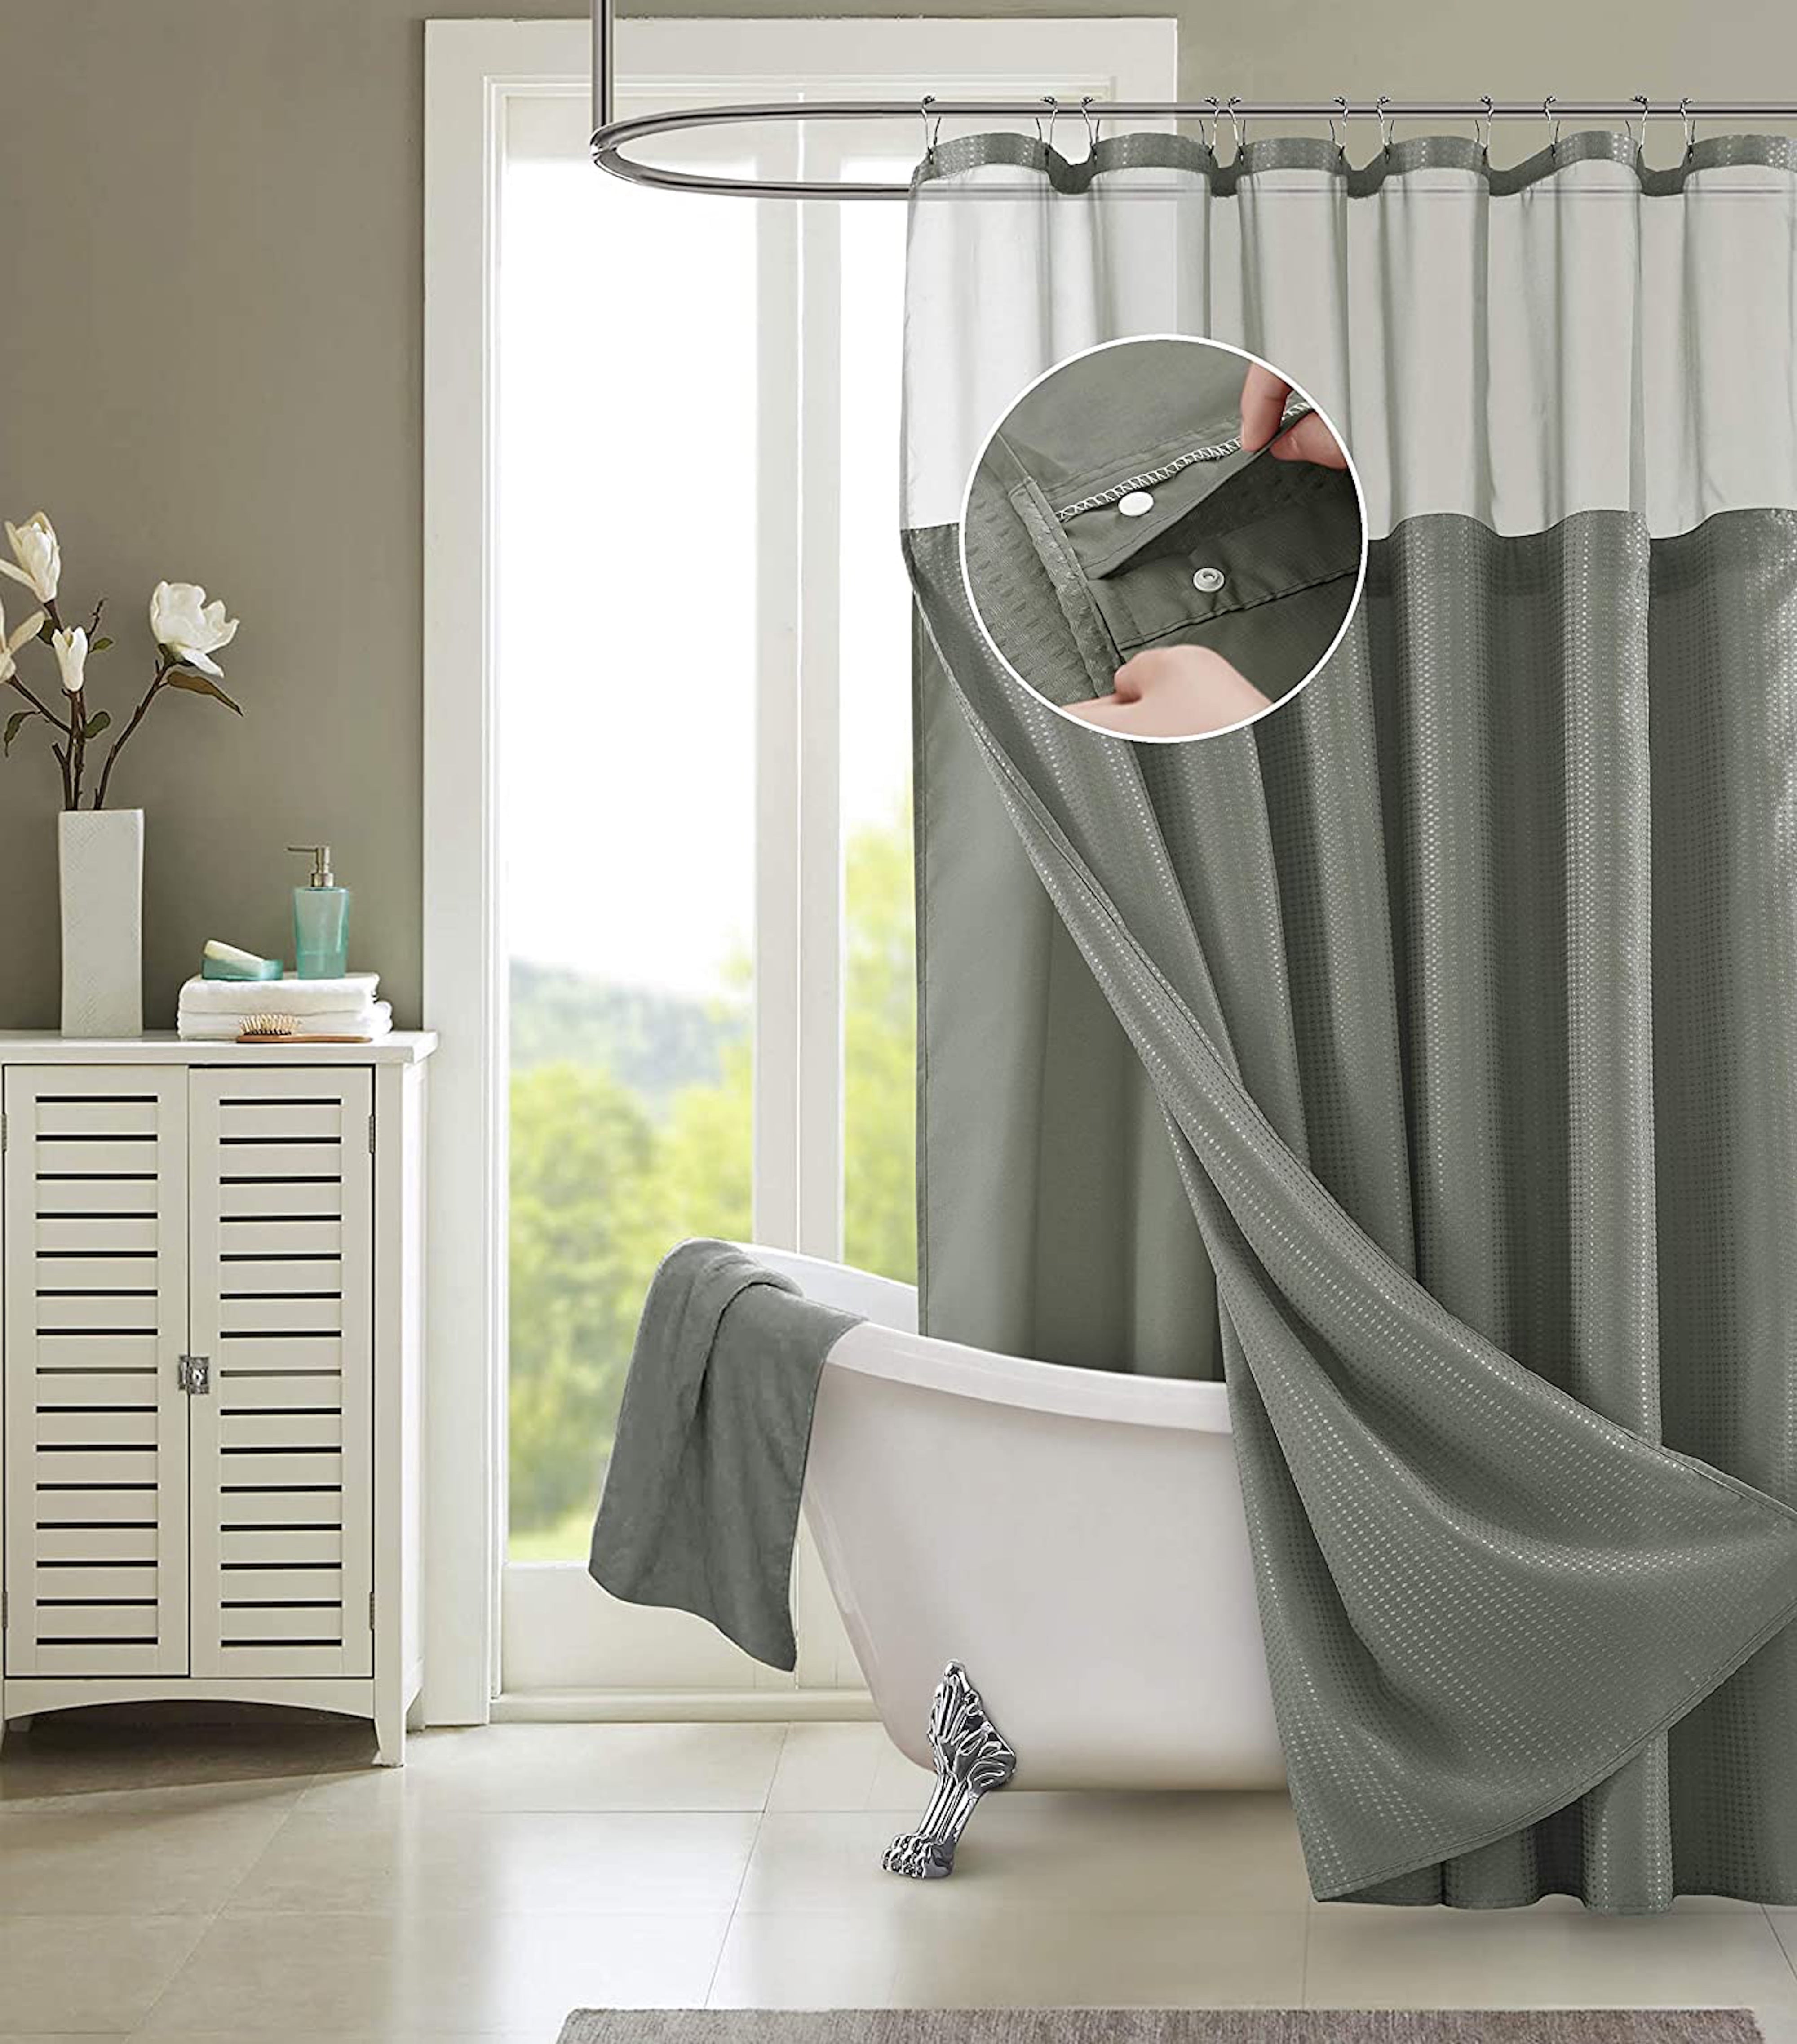 Retro Car Poster Waterproof Fabric Shower Curtain Liner Home Bathroom Set Decor